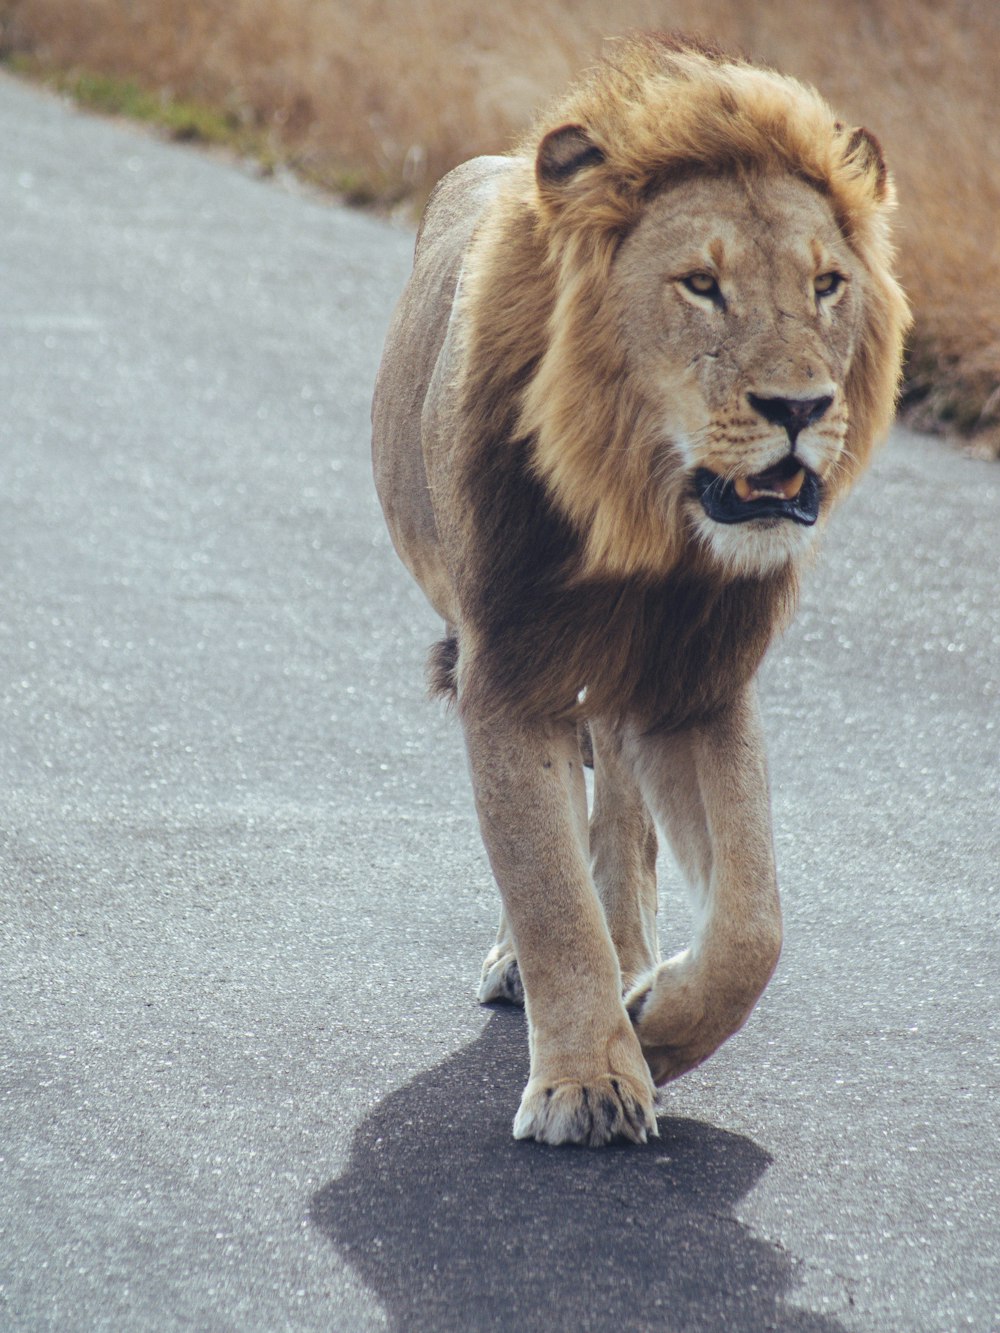 a lion walking on a road